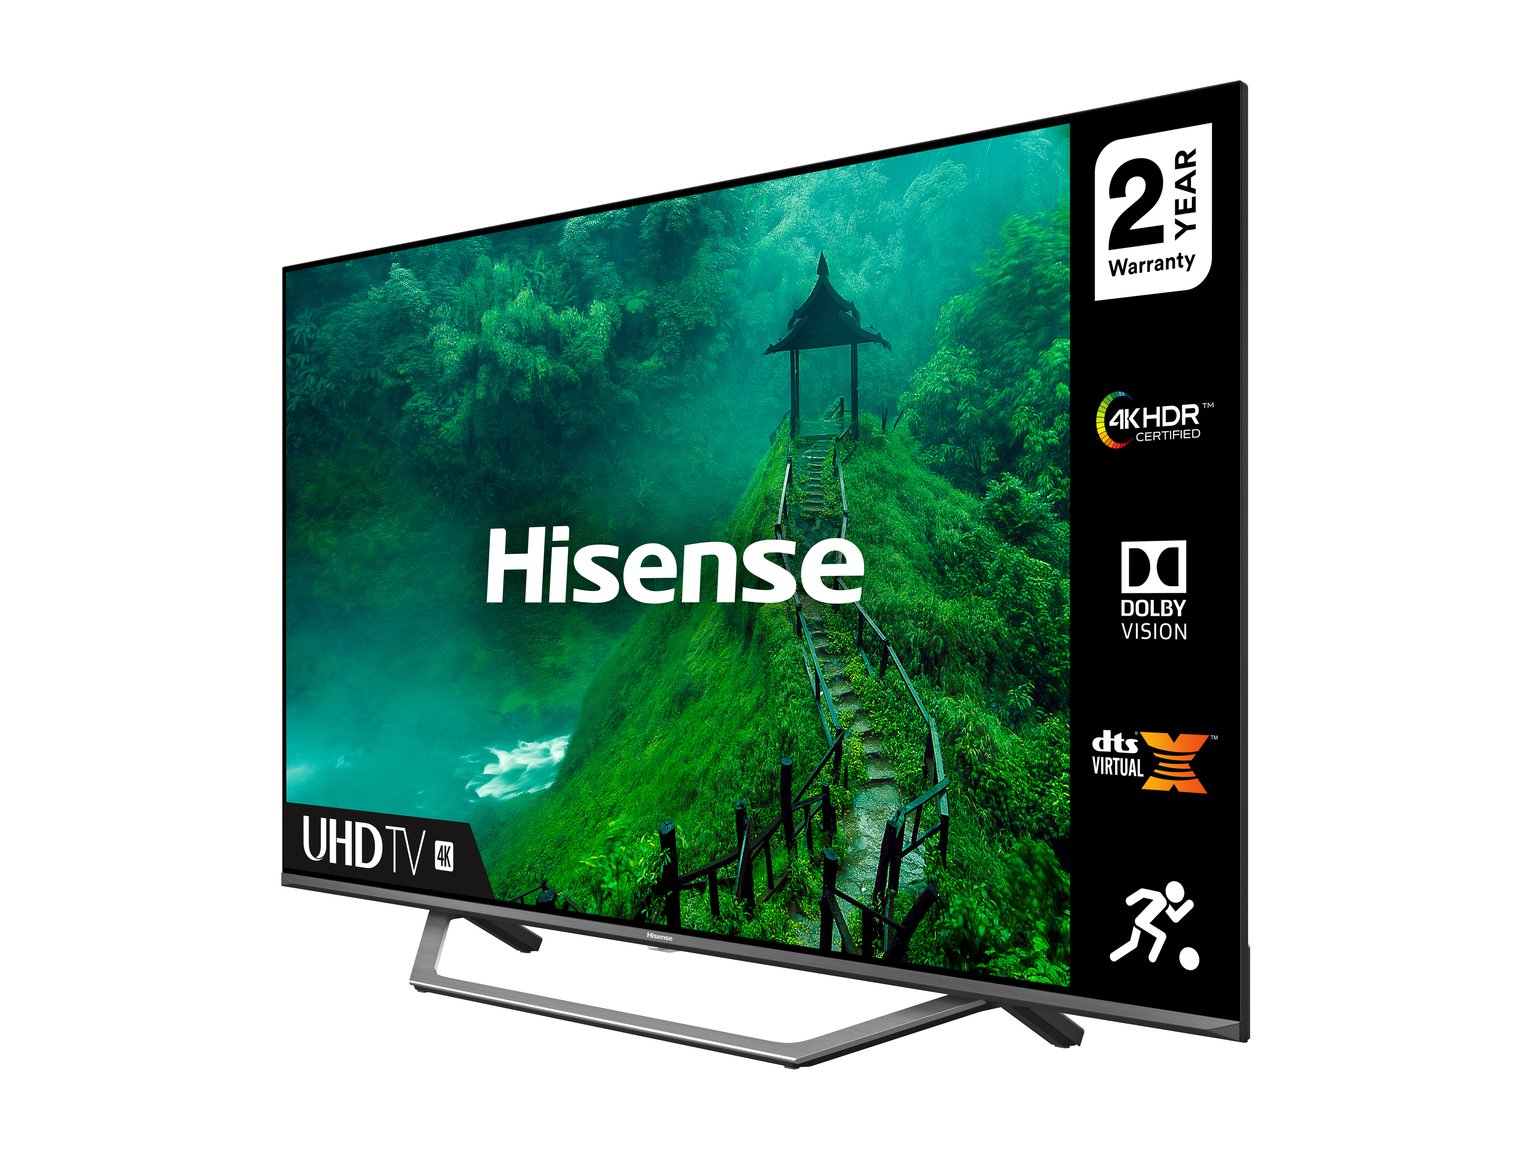 Hisense 43 Inch 43AE7400FTUK Smart 4K UHD LED TV with HDR Review